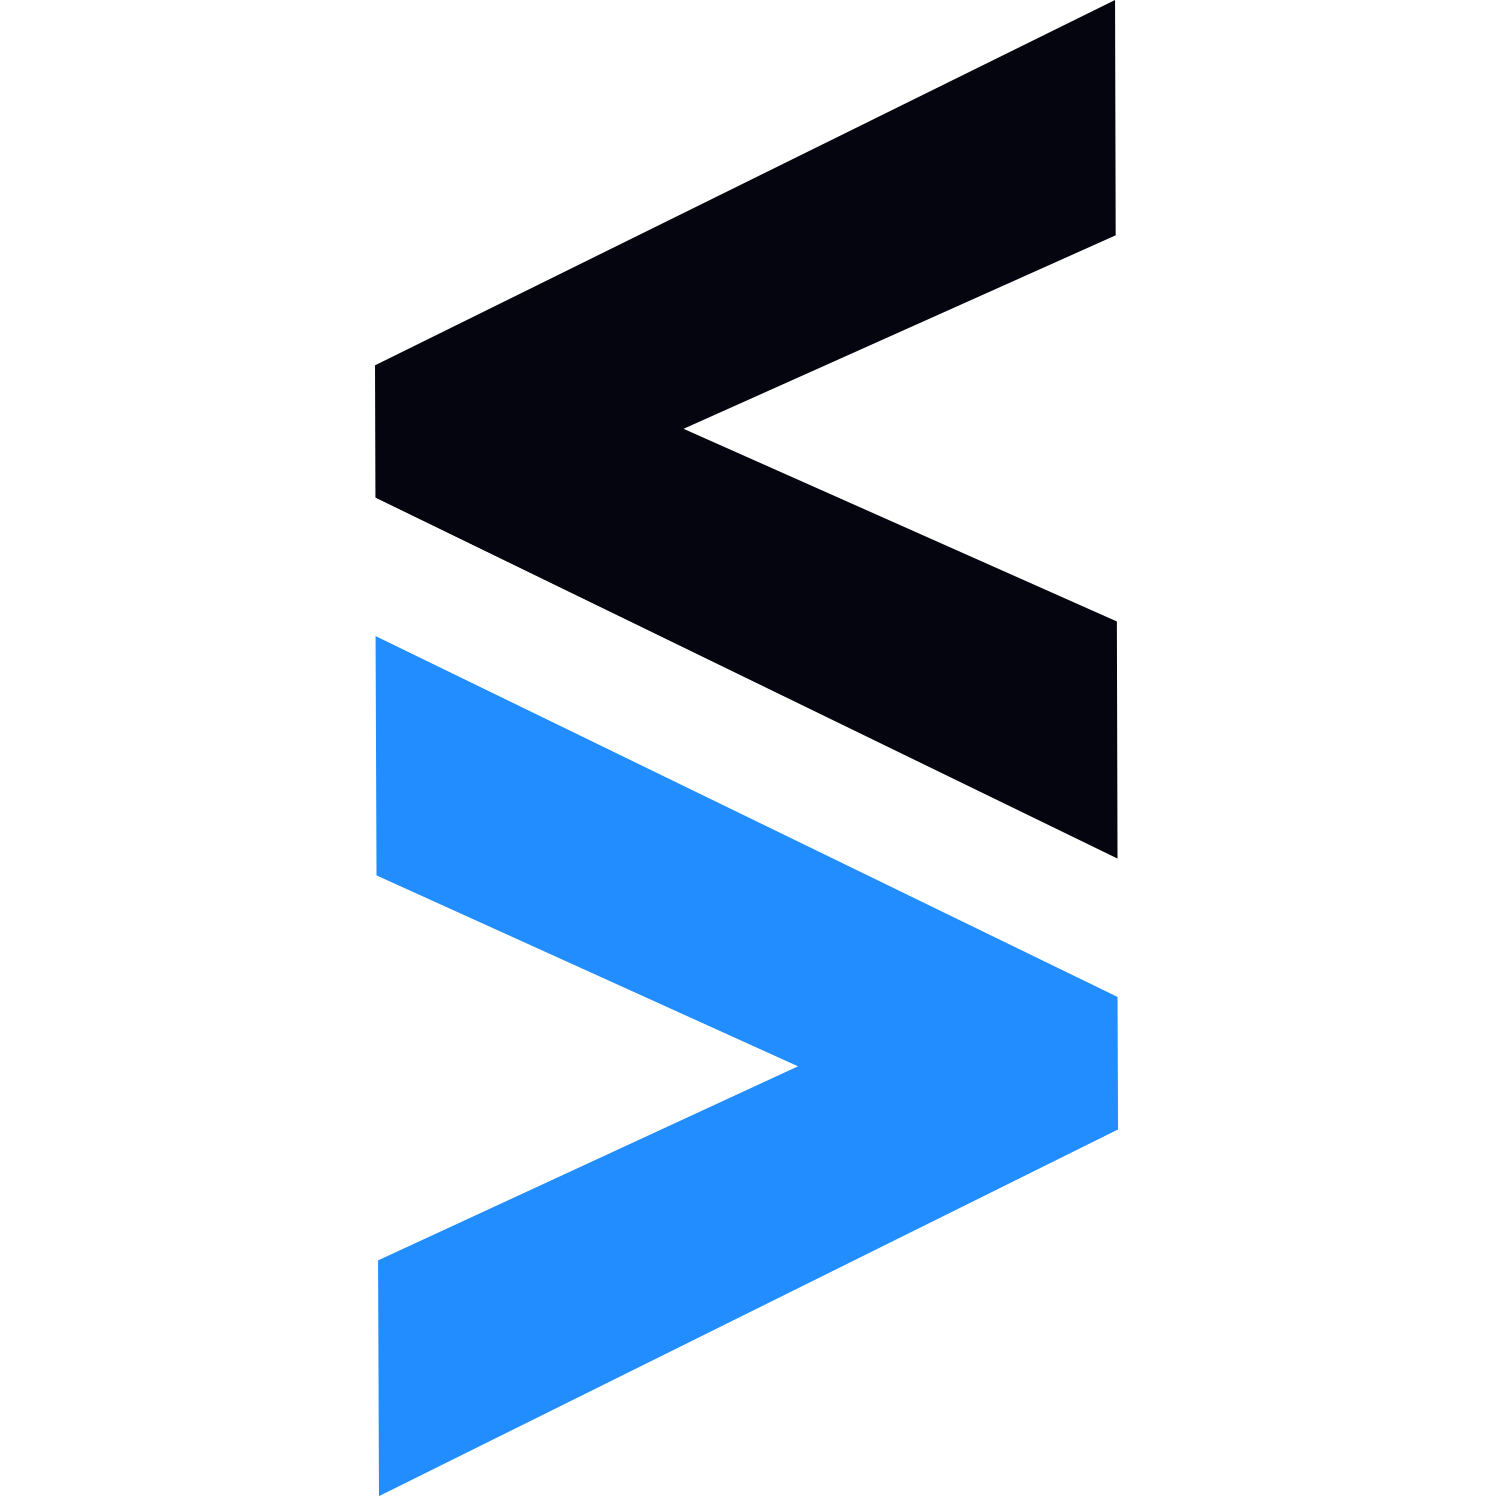 Stocktwits logo